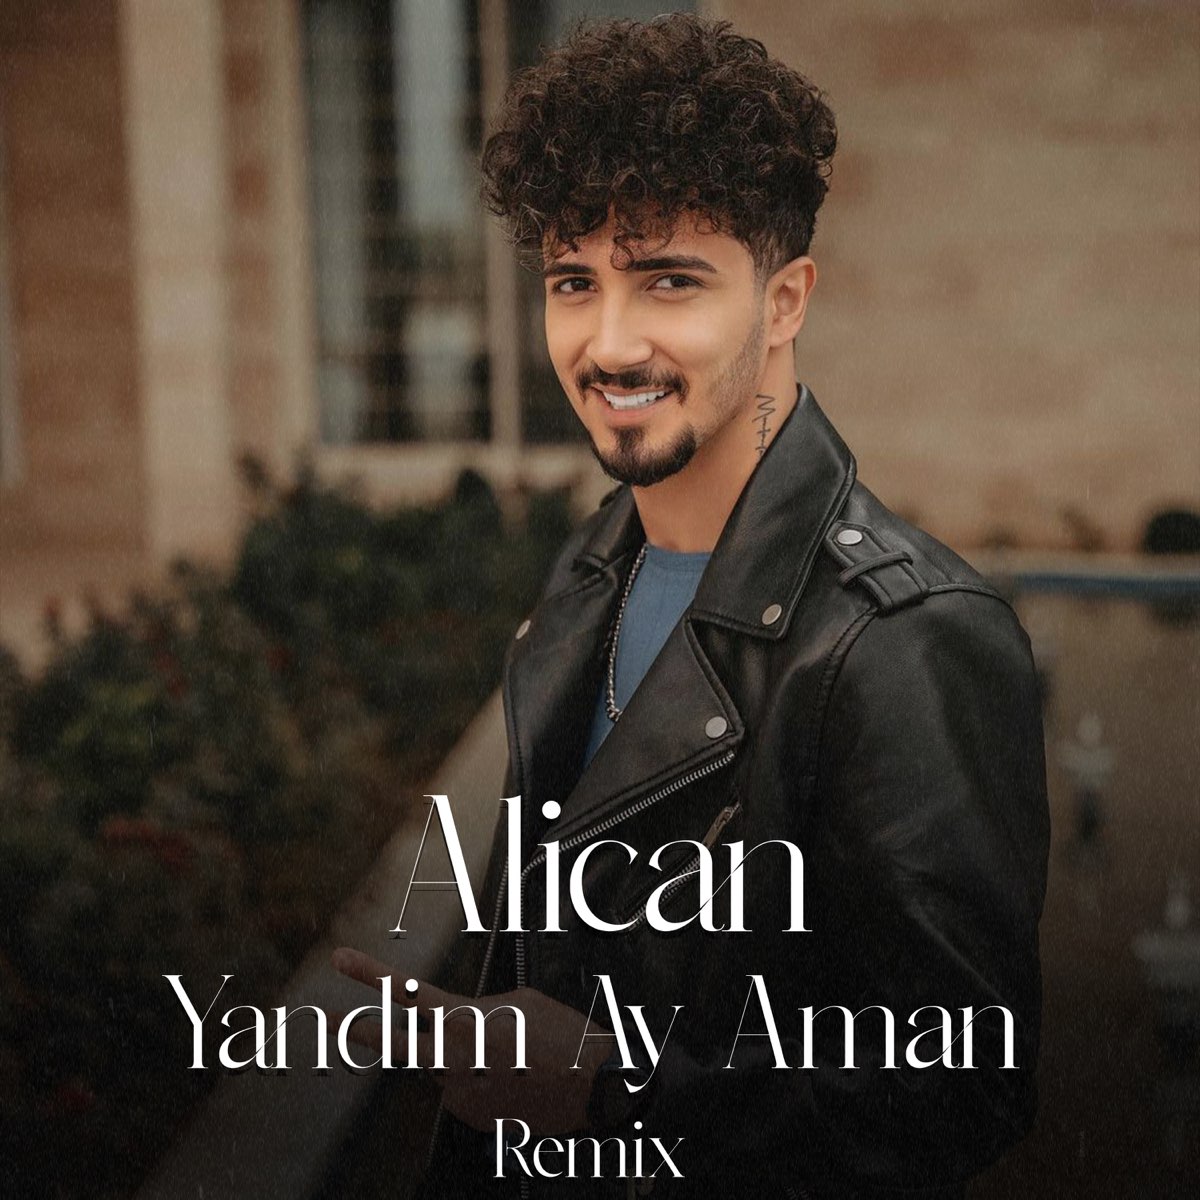 Yandim Ay Aman (Remix) - Single - Album by Alican - Apple Music